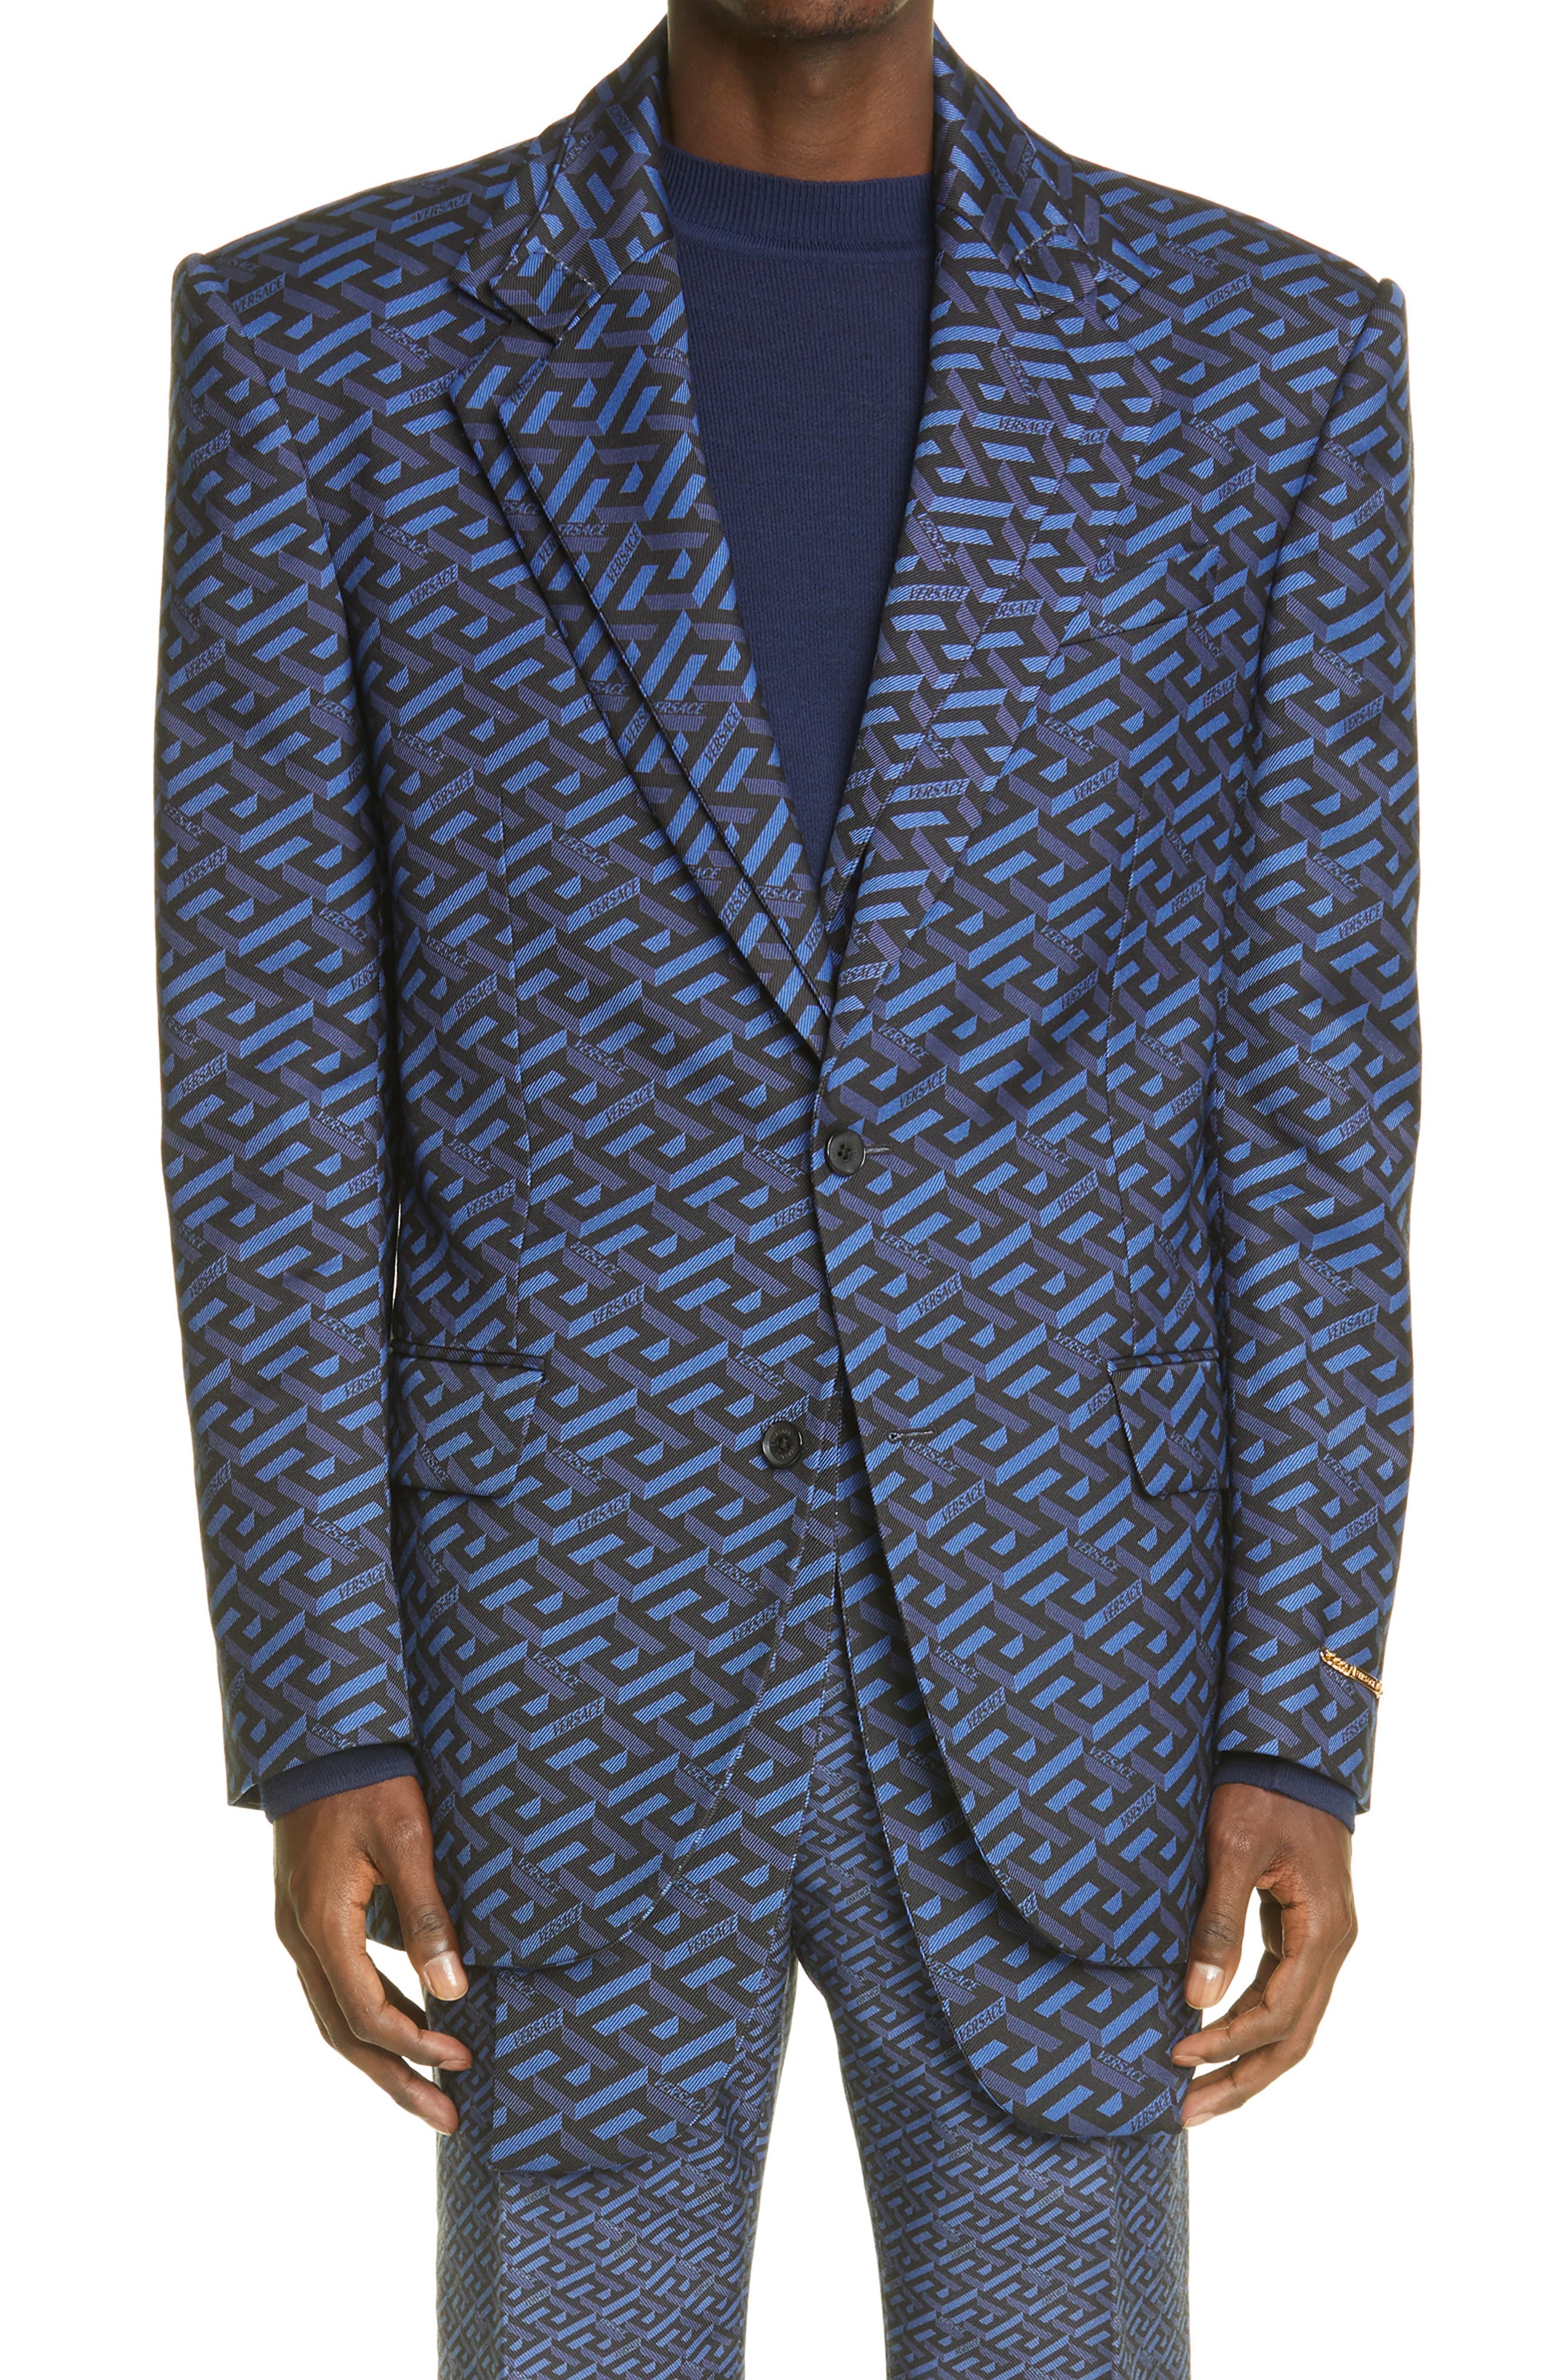 monogram suit jacket